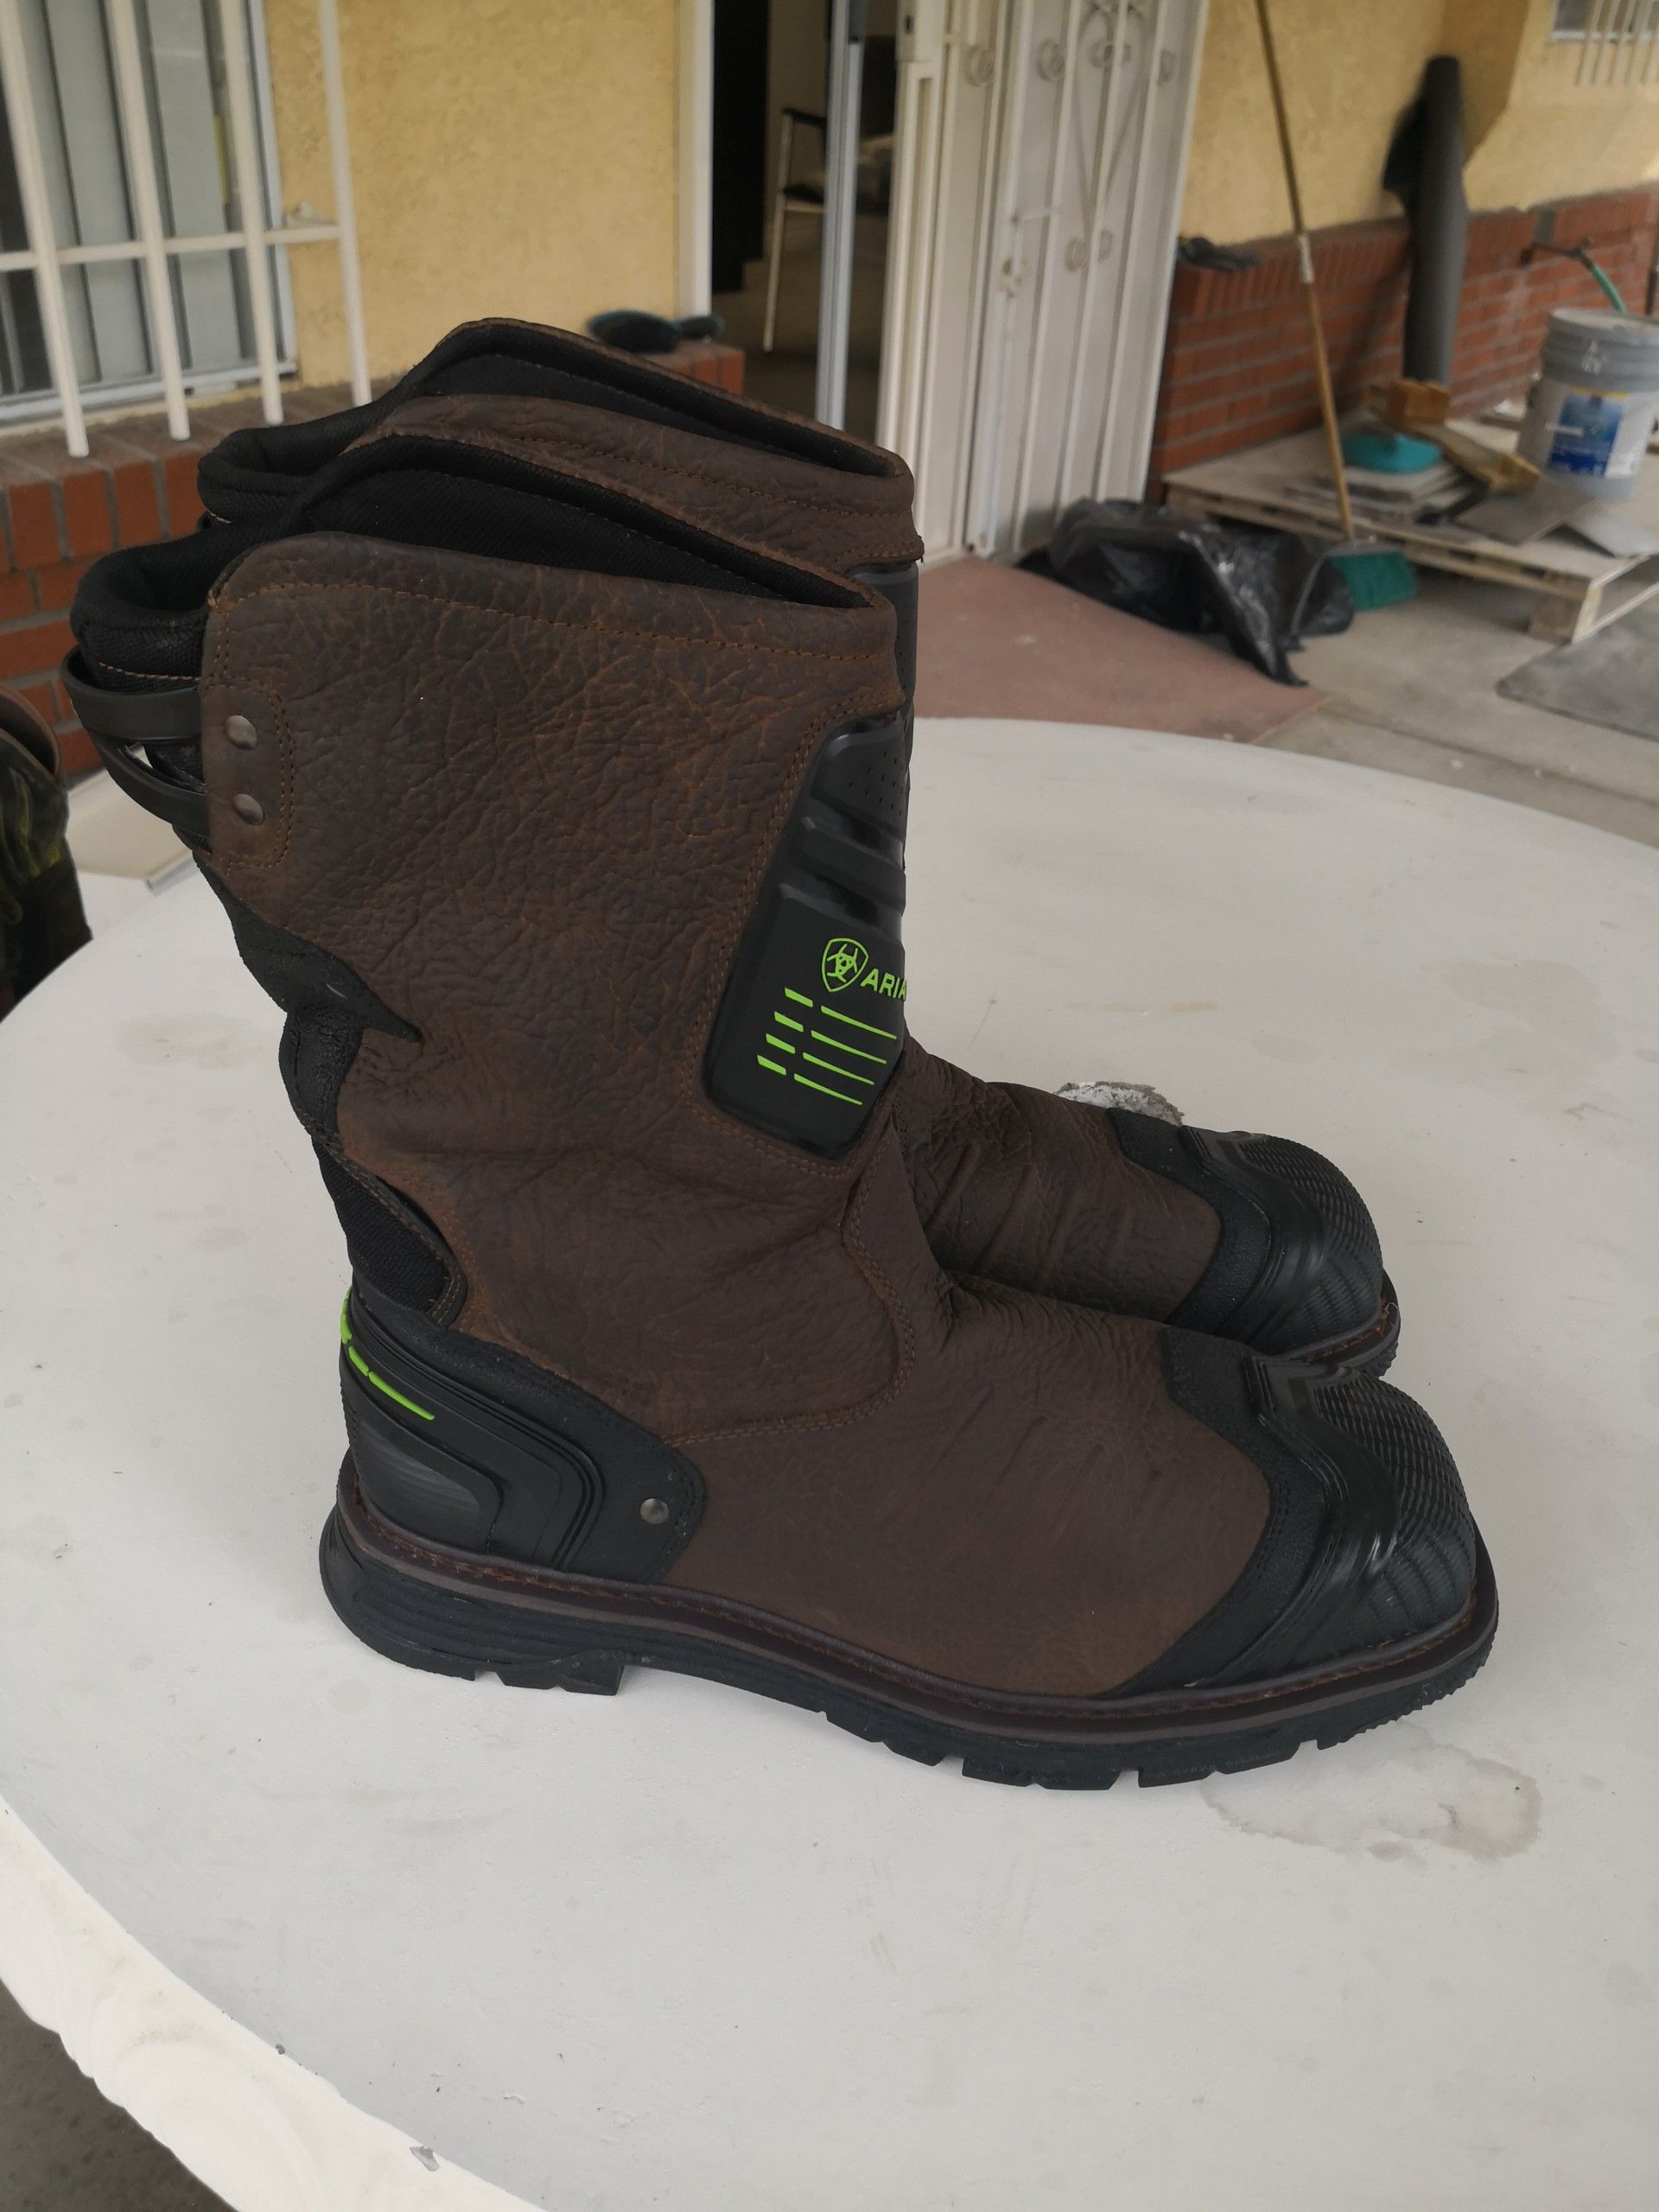 Ariat catalyst composite toe work boots size 12EE